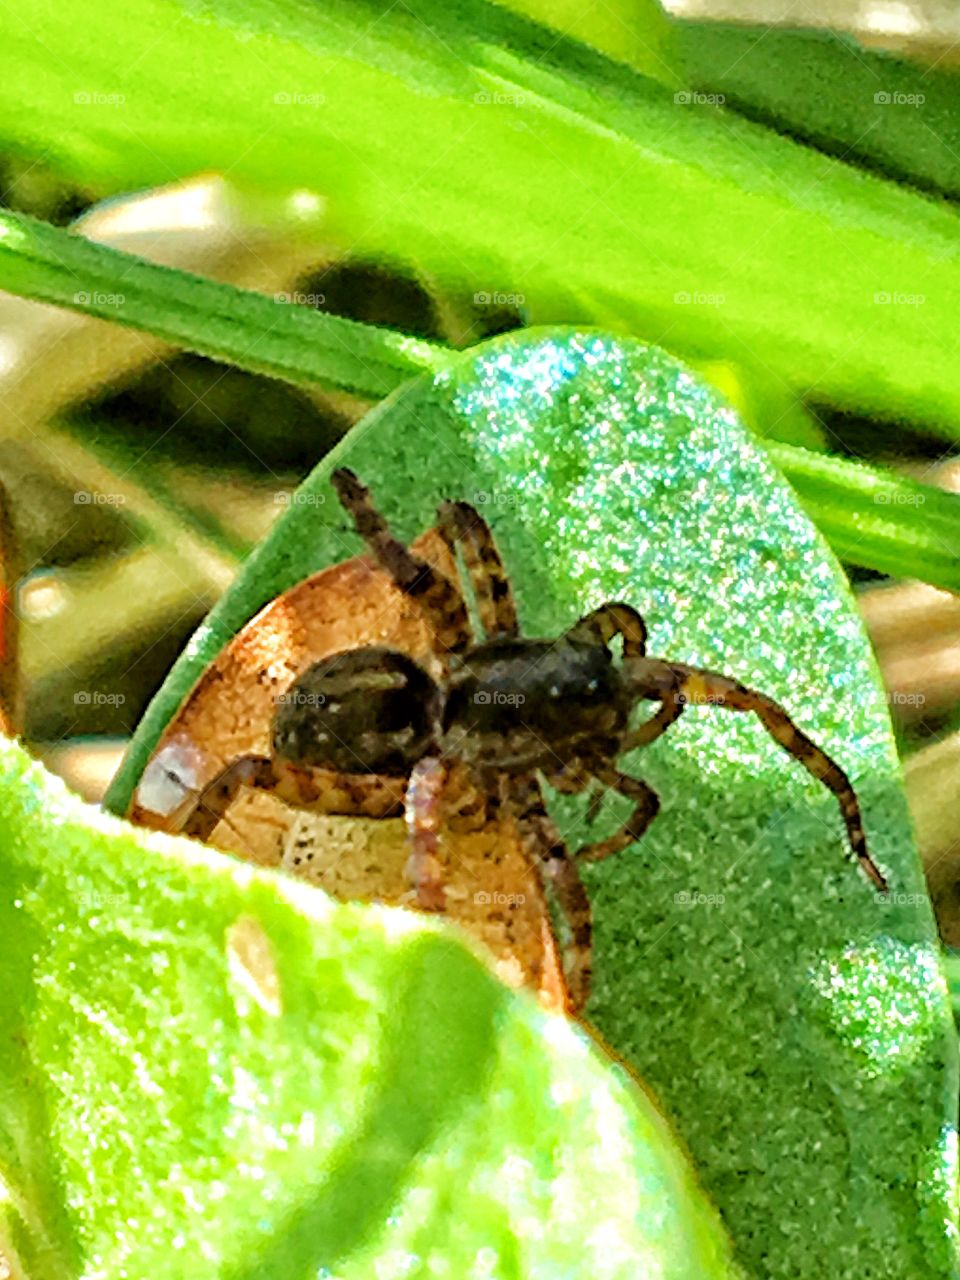 Spider close up 